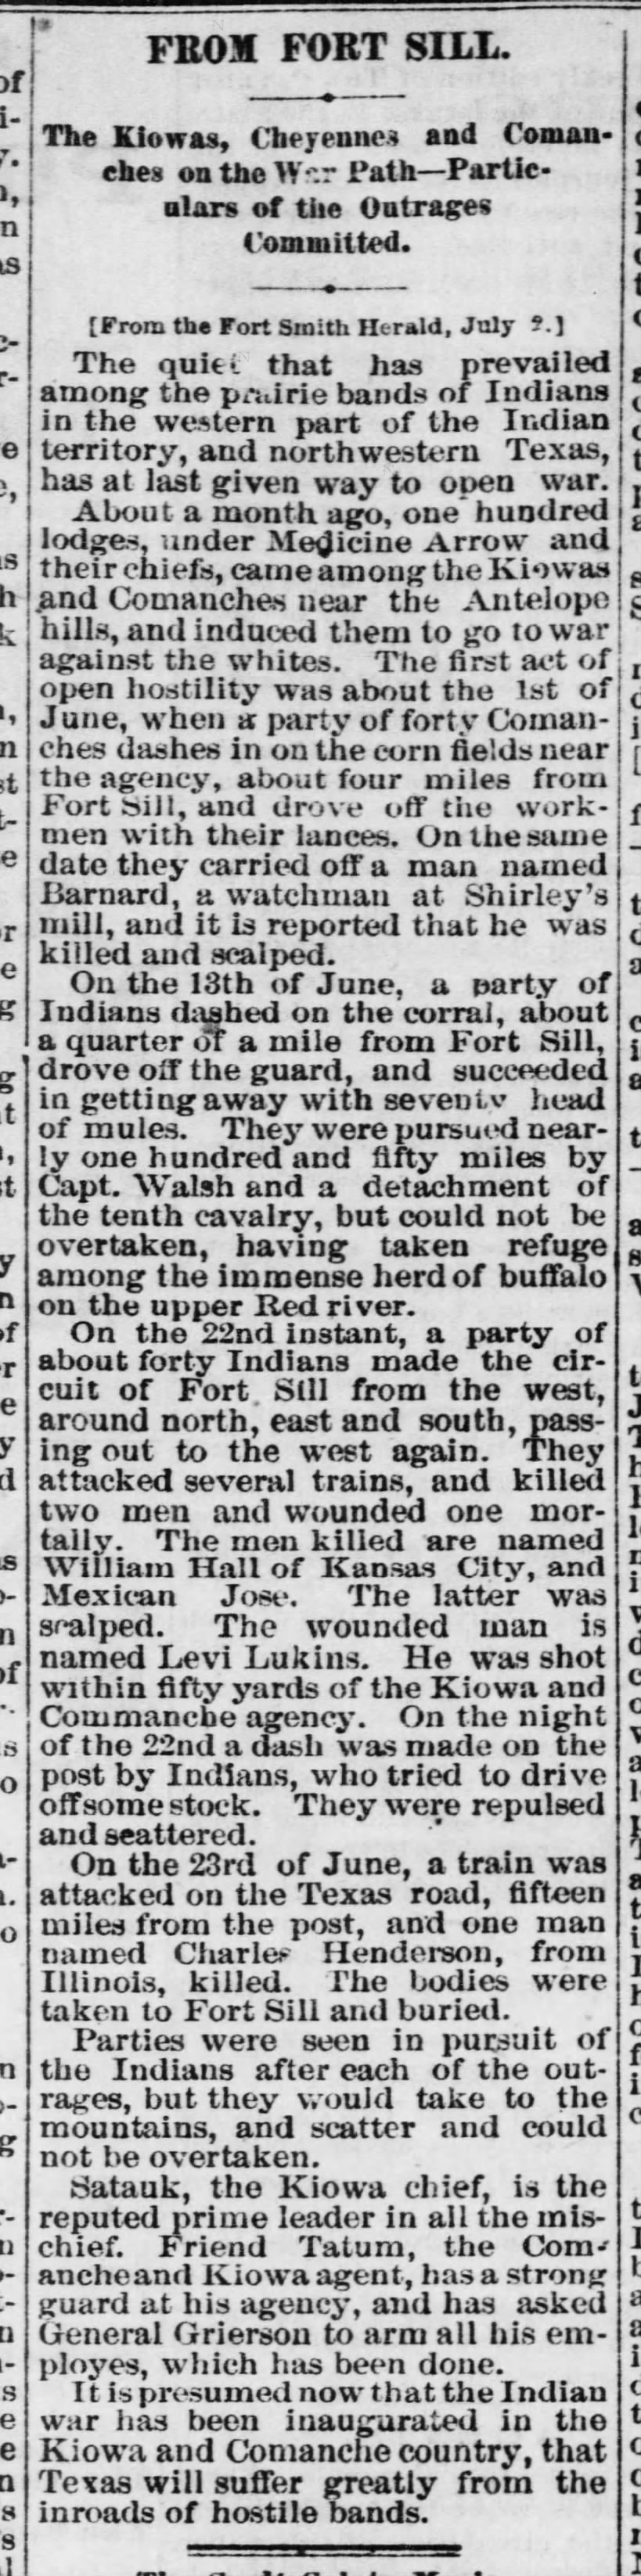 Atchison Daily Patriot (Atchison, Kansas) July 9, 1870 Sat. Page 1